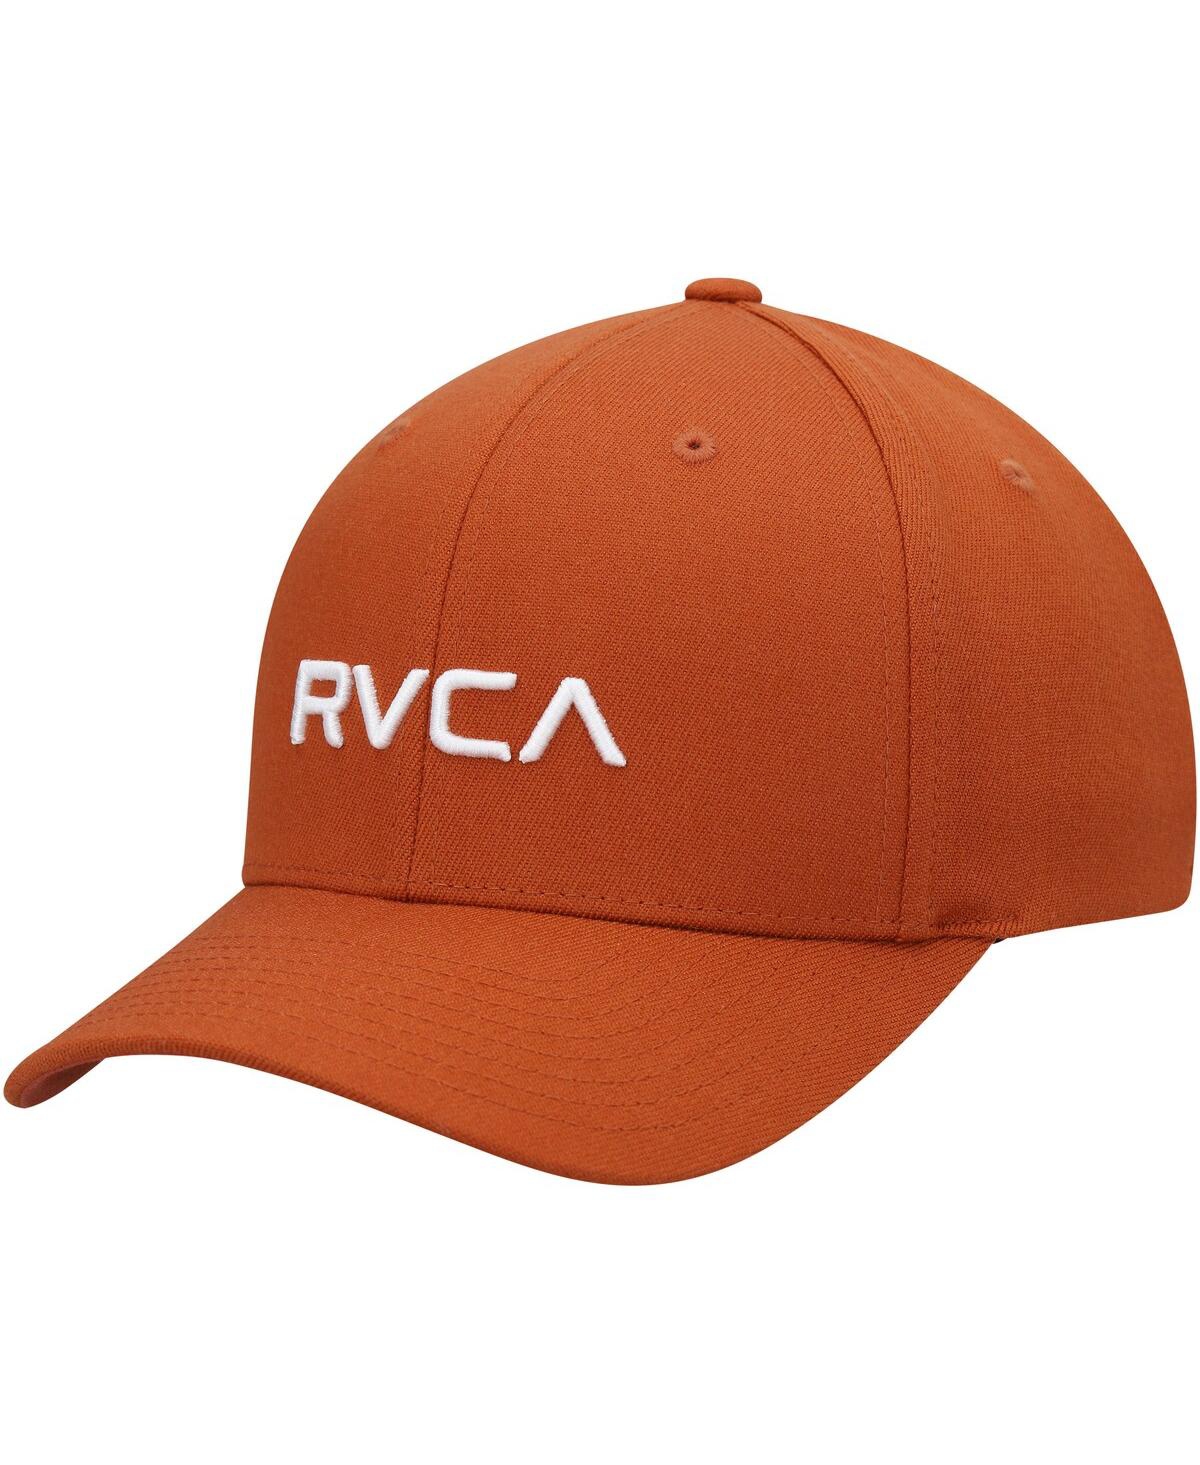 Rvca Men's  Orange Flex Fit Hat